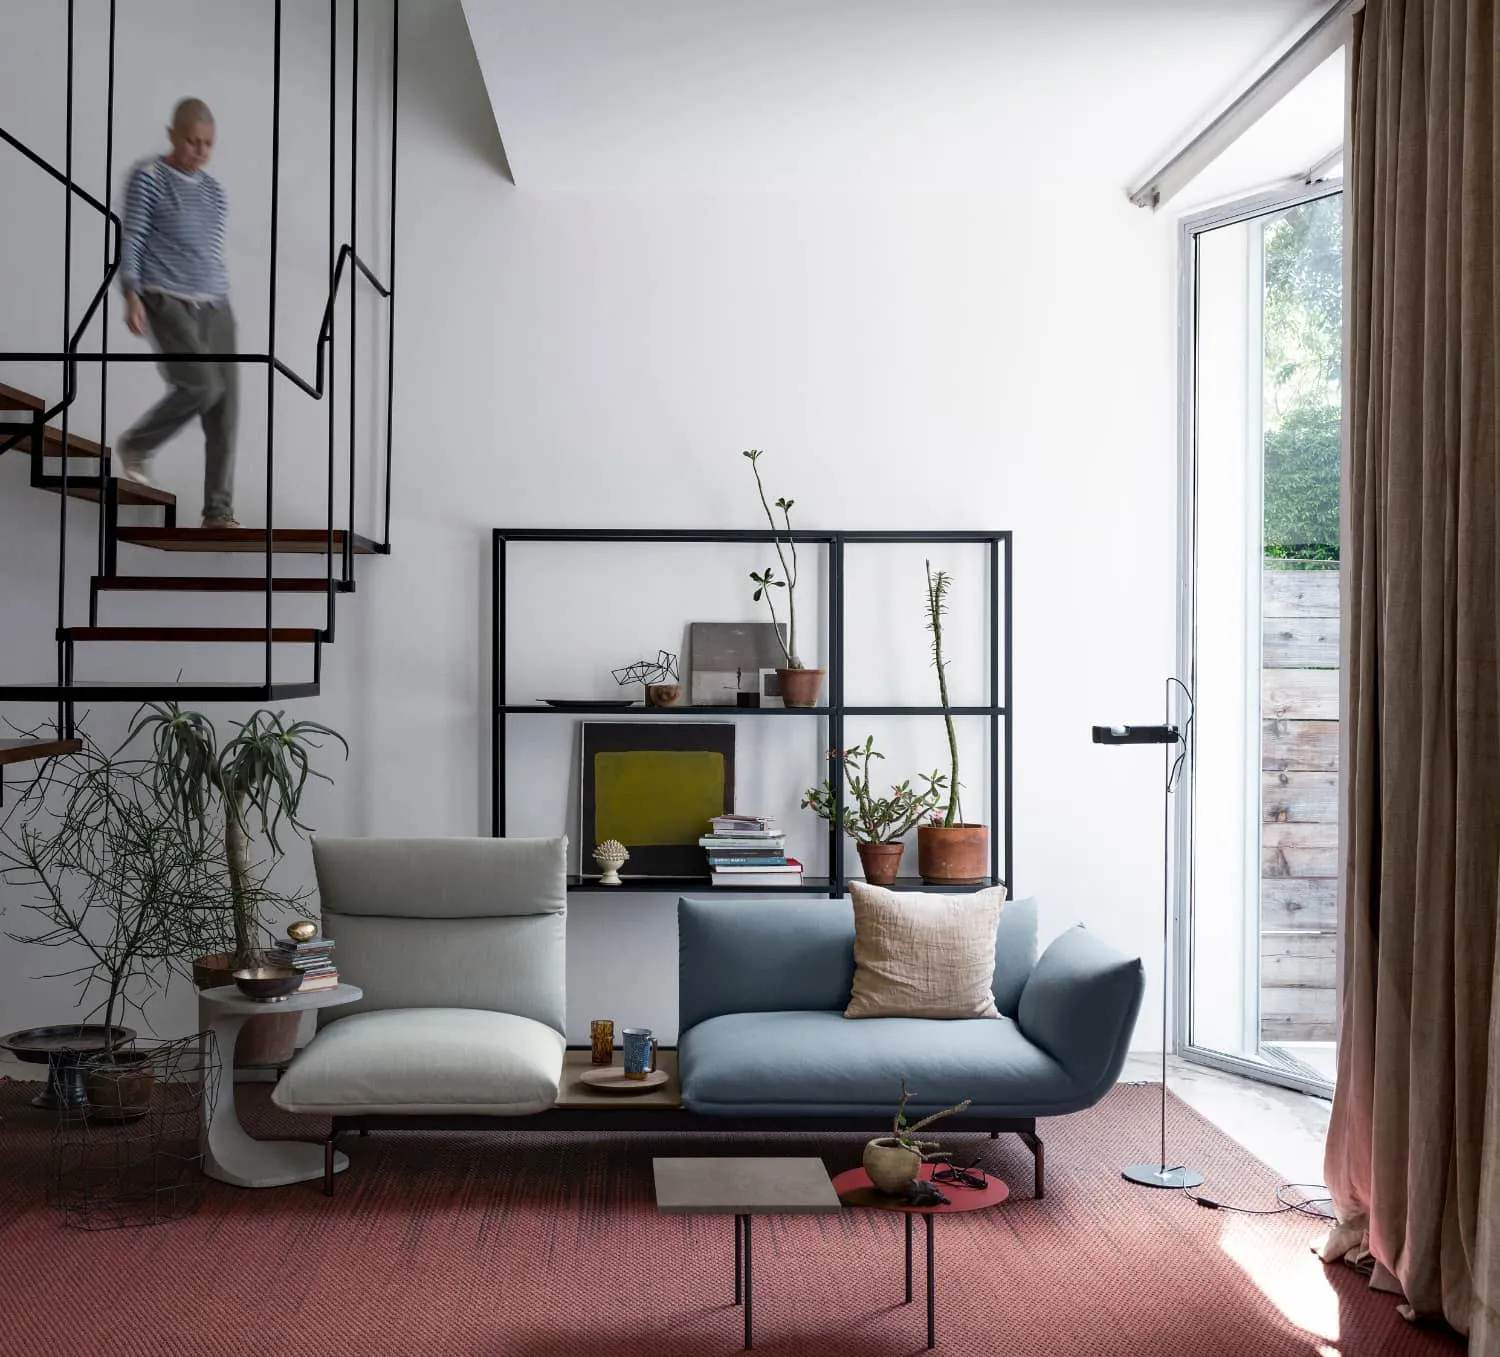 modern designer sofa sets for your living ،e, latest decor element for ،me, carpet, plants for biophilic touch